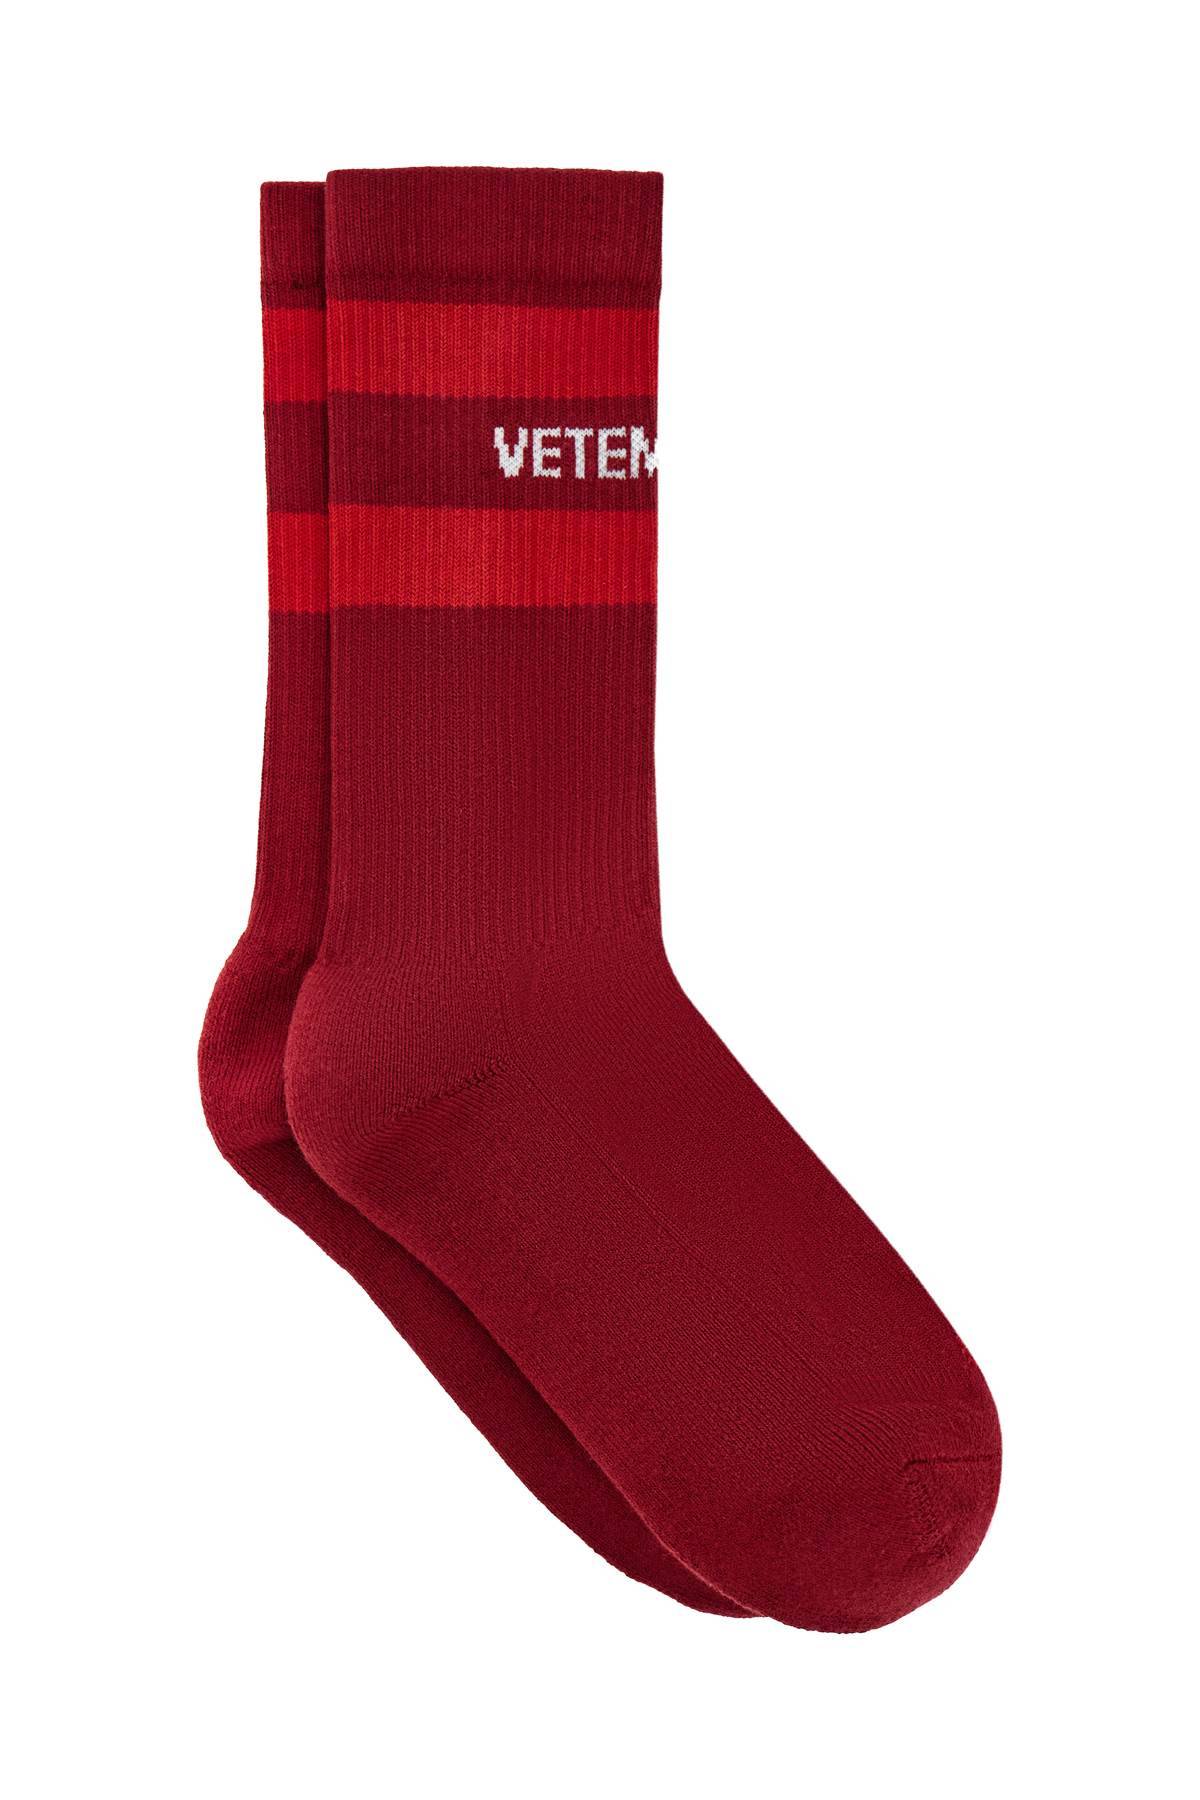 Vetements VETEMENTS logoed socks